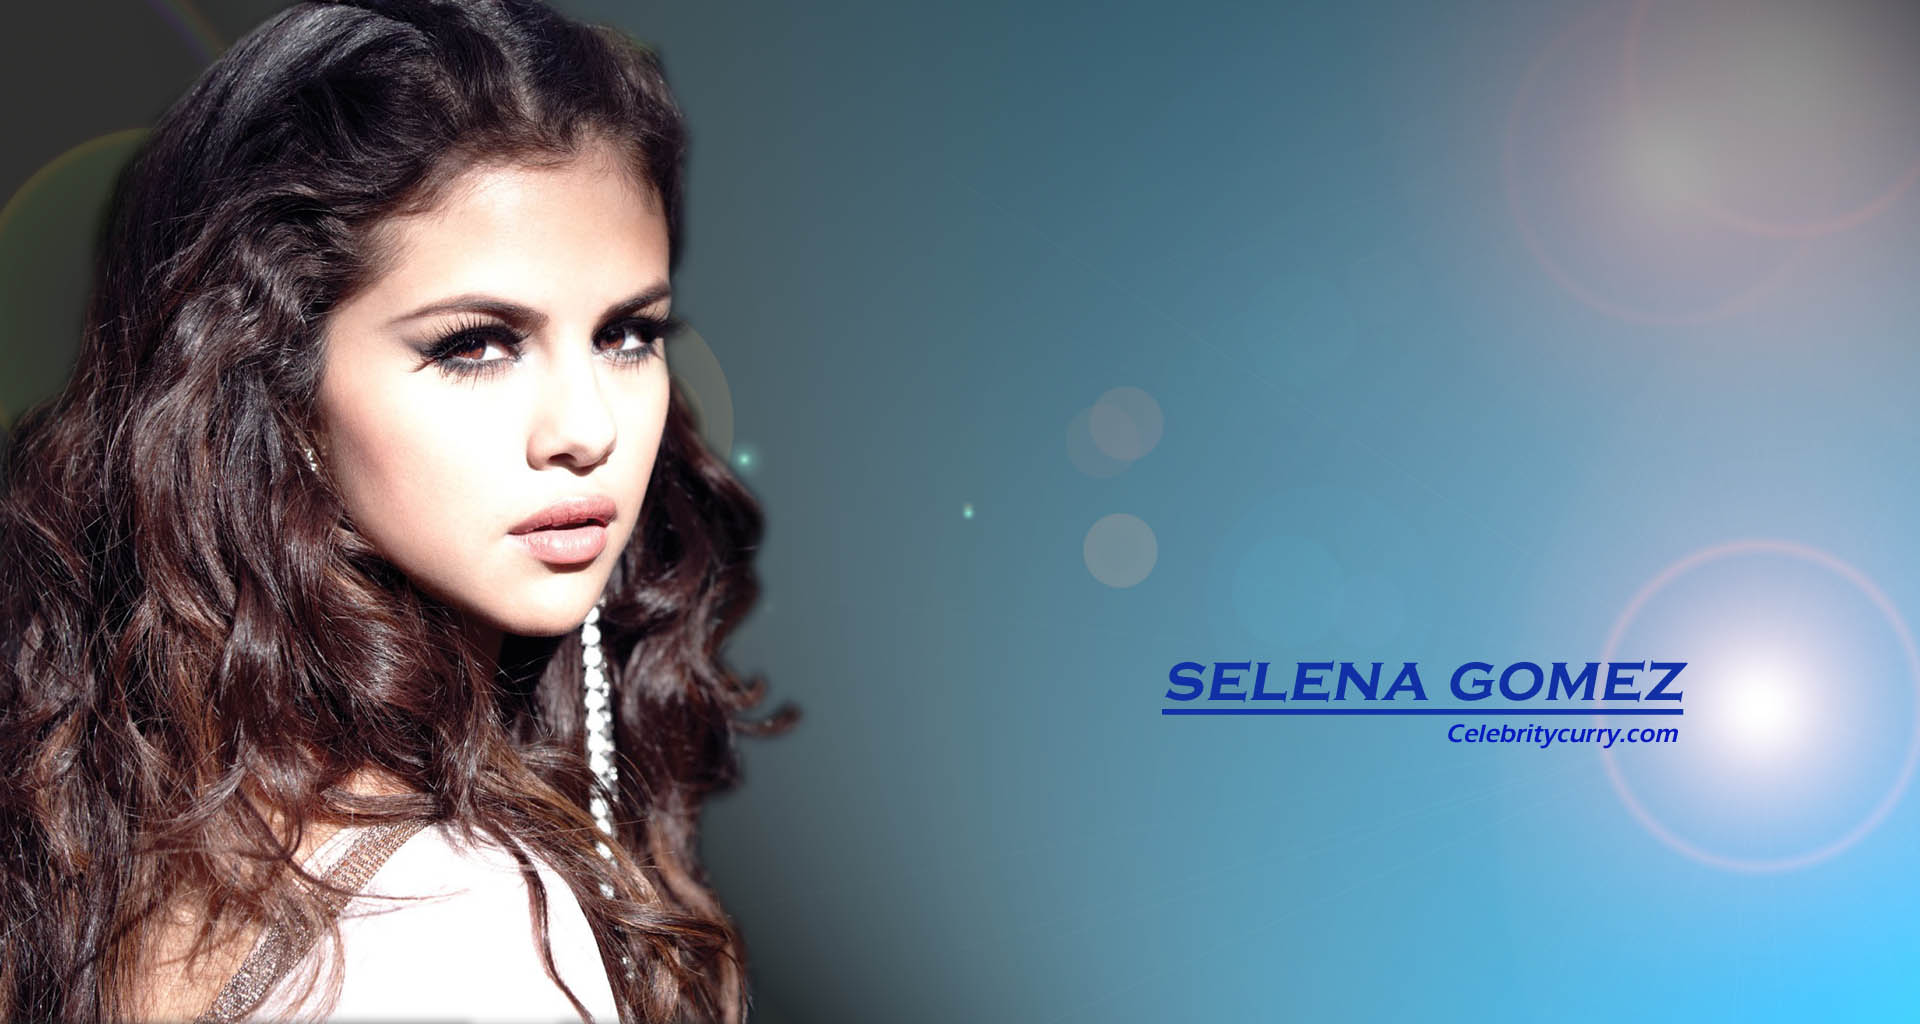 Cute Singer Selena Gomez Wallpaper In High Definition